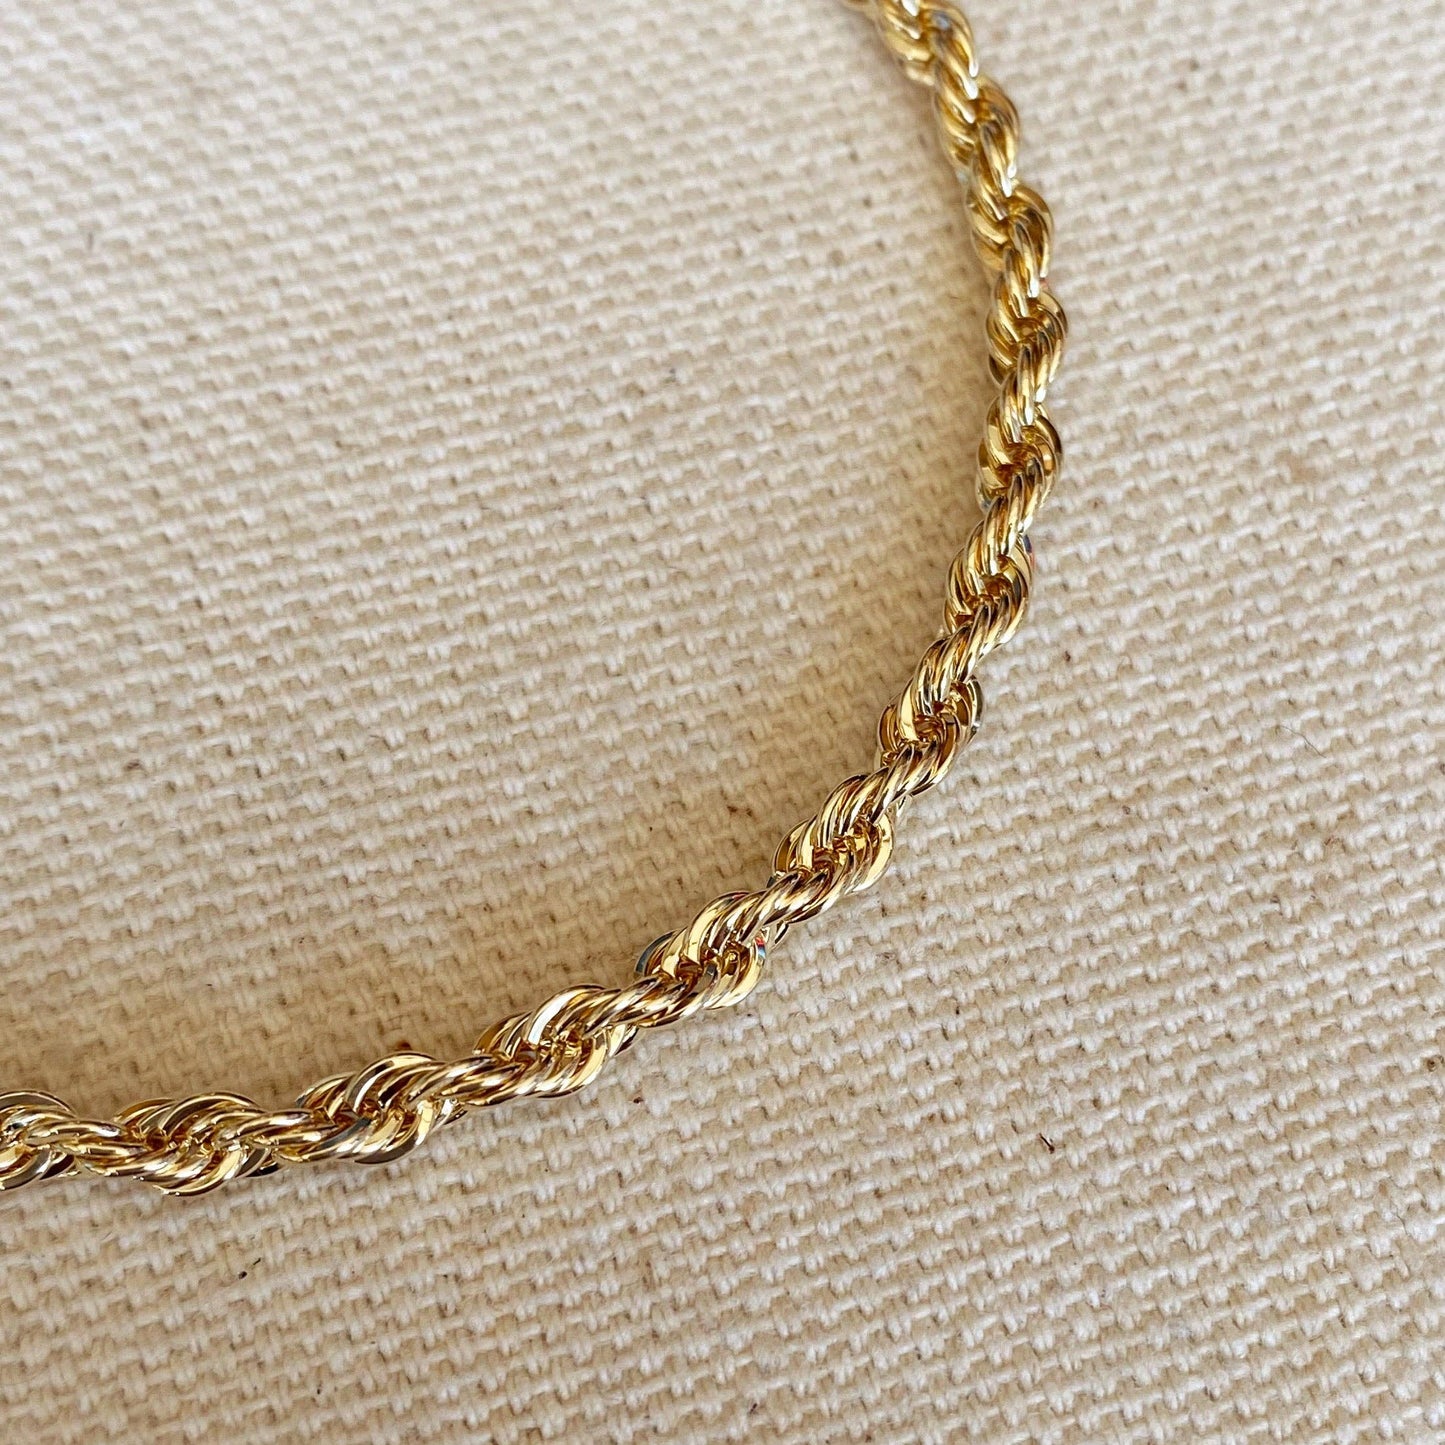 18k Gold Filled 3mm Rope Bracelet: 6.5 inches